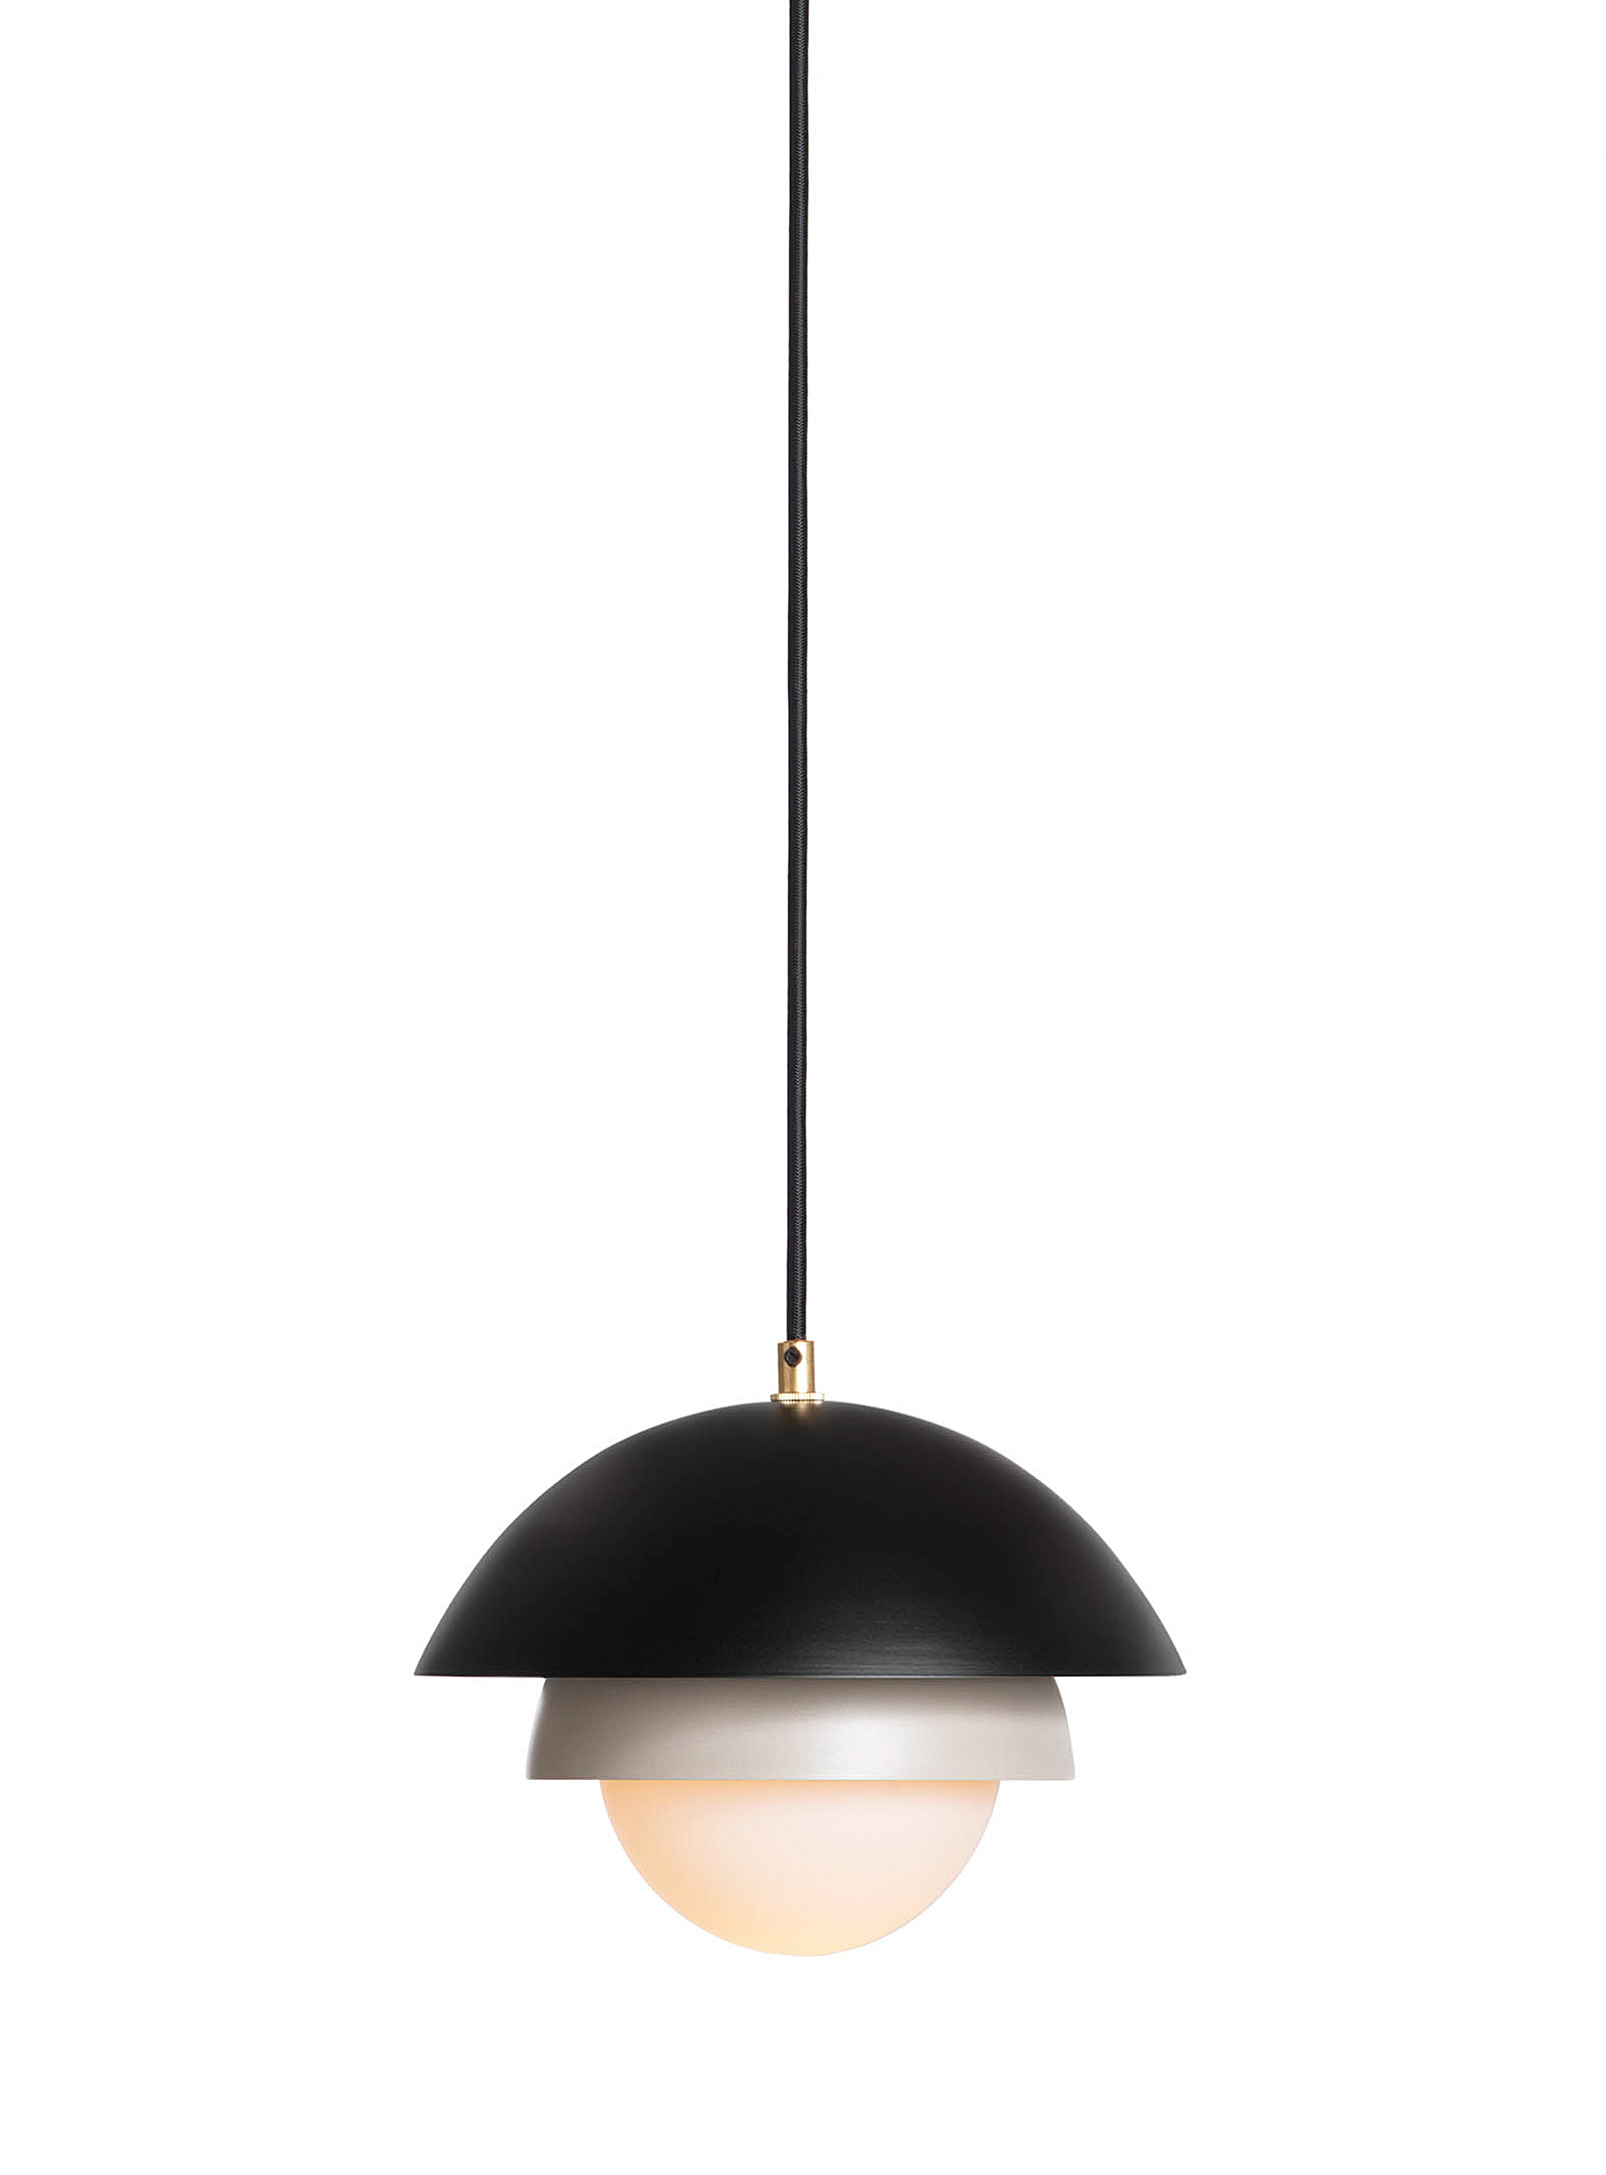 Luminaire Authentik Finlandaise Hanging Lamp In Patterned Black